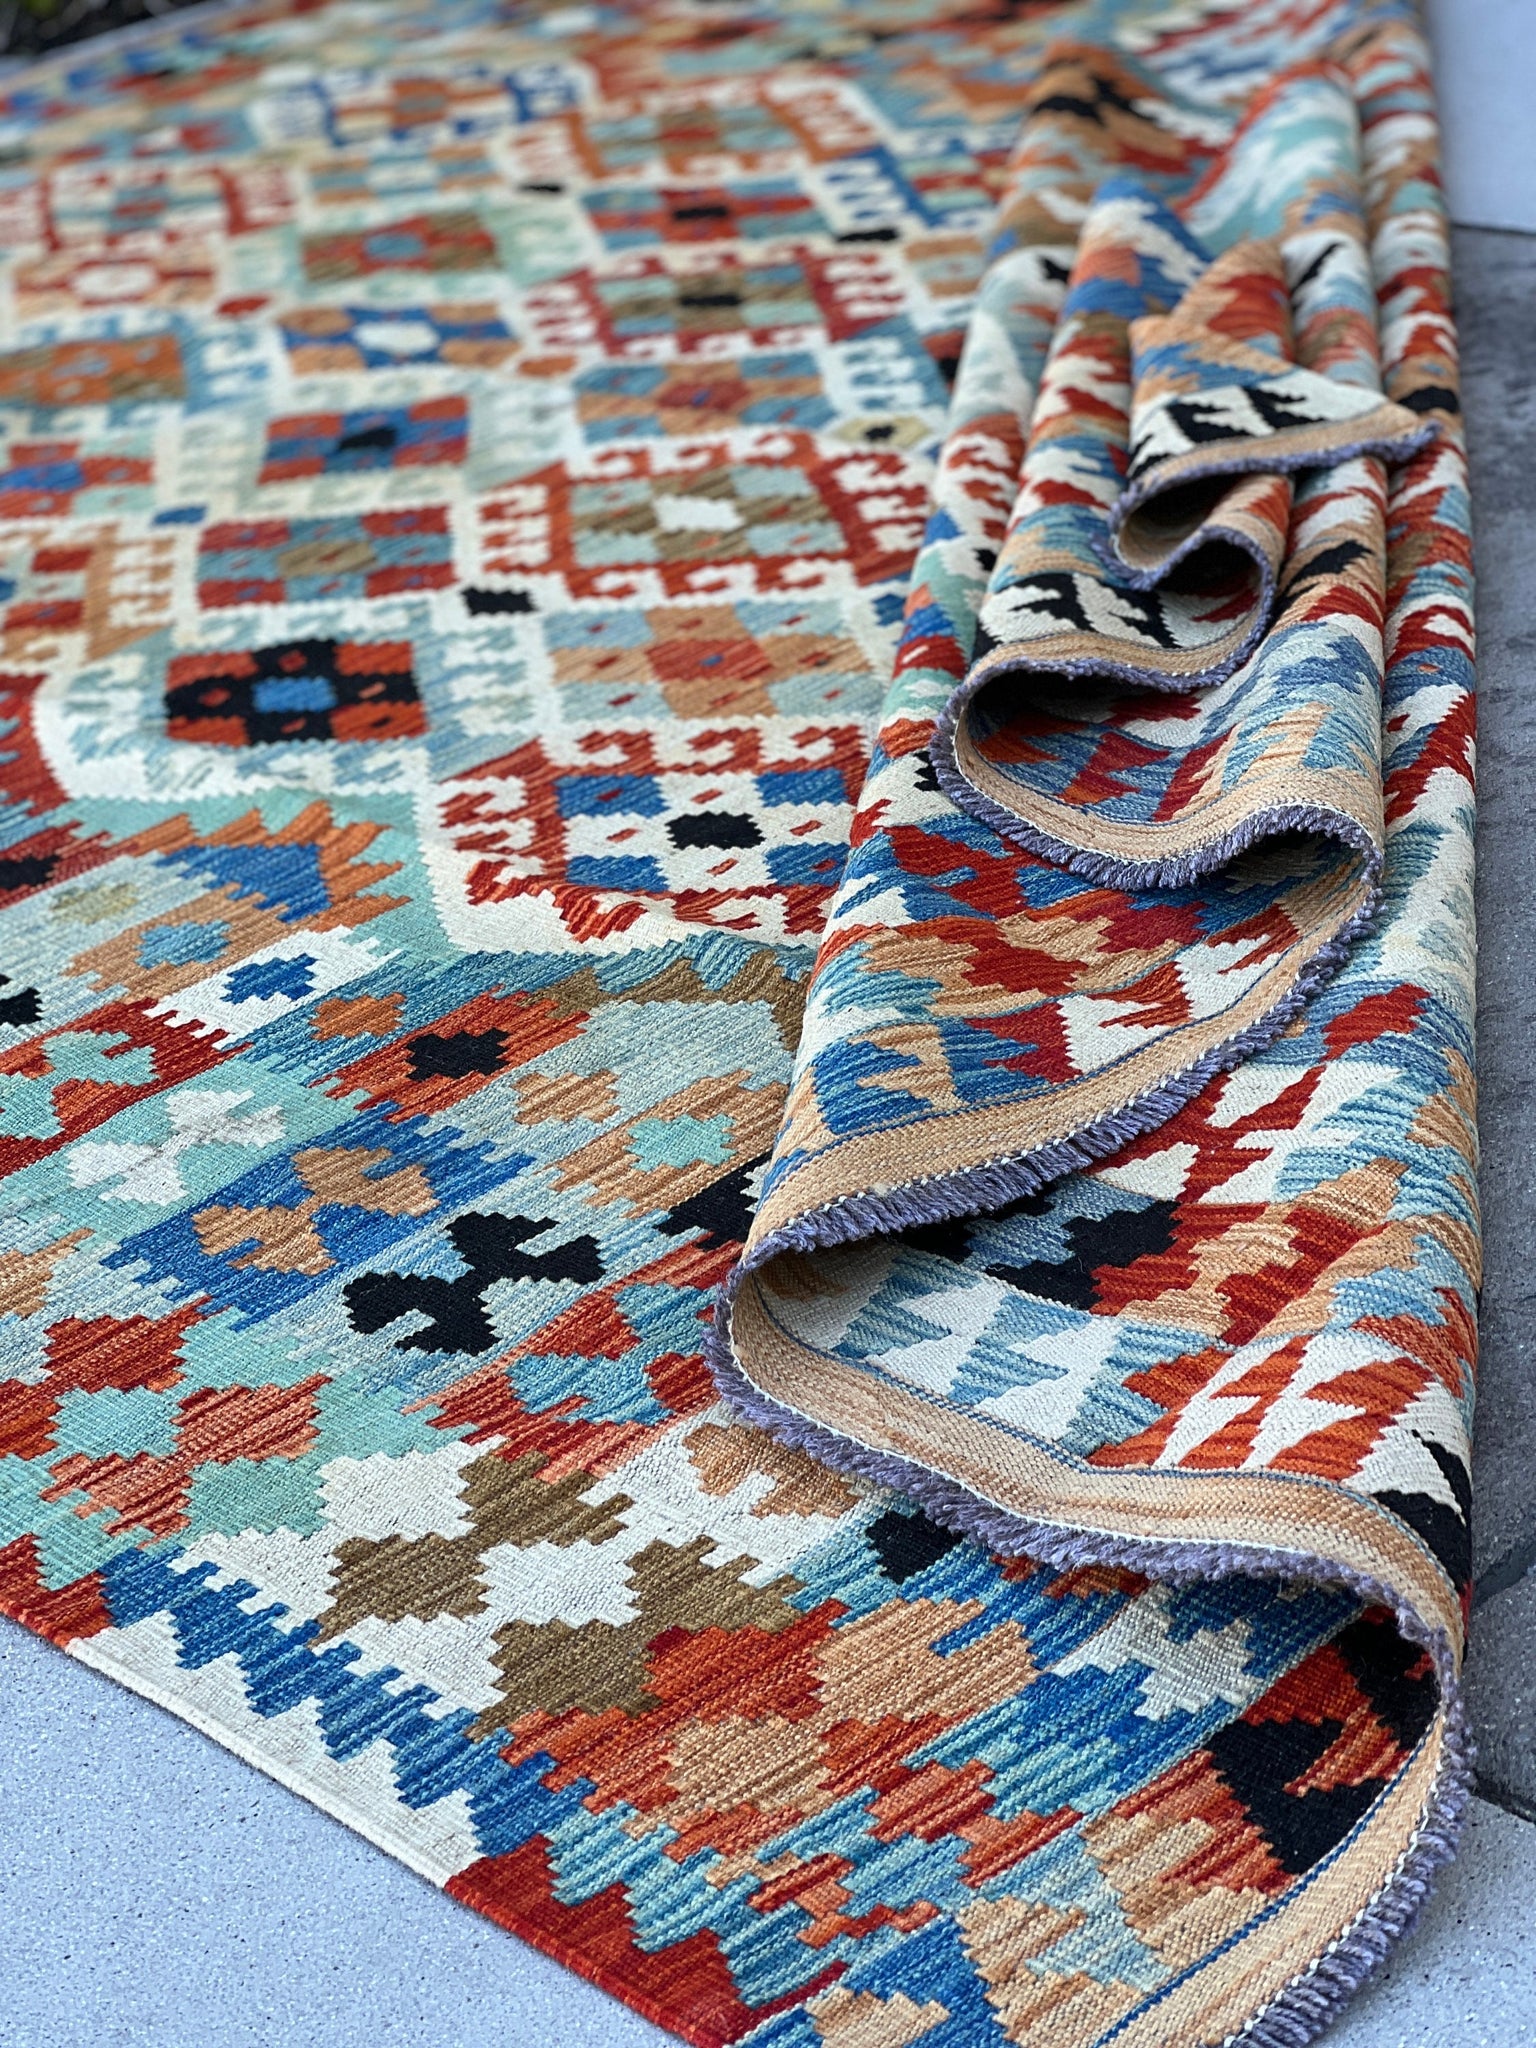 7x10 (215x305) Handmade Afghan Kilim Rug | Copper Brown Blue Teal Black White Orange | Wool Tribal Turkish Moroccan Oriental Persian Oushak